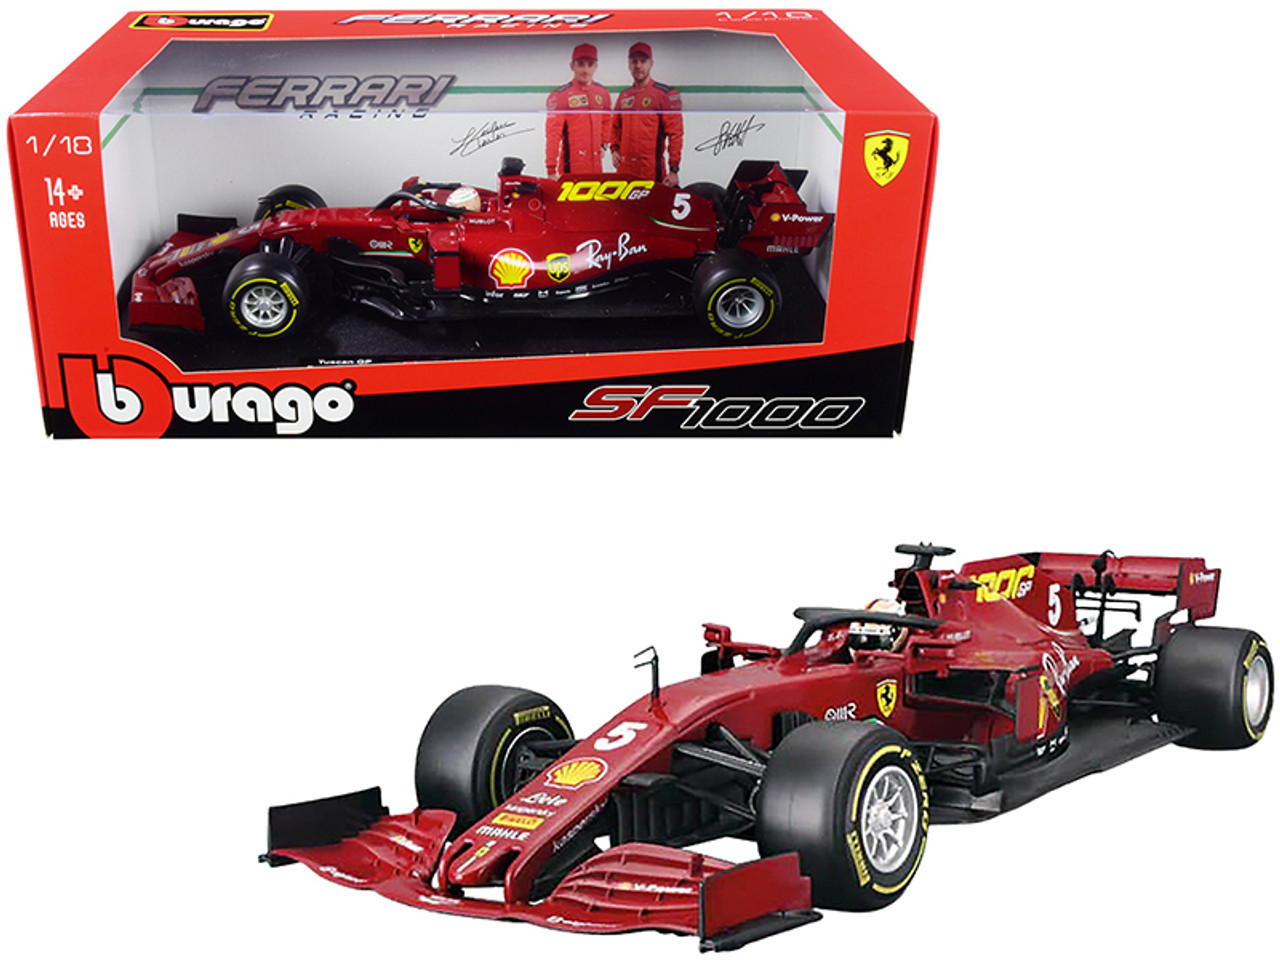 BURAGO: 7 F1 race cars in box including Ferrari williams…